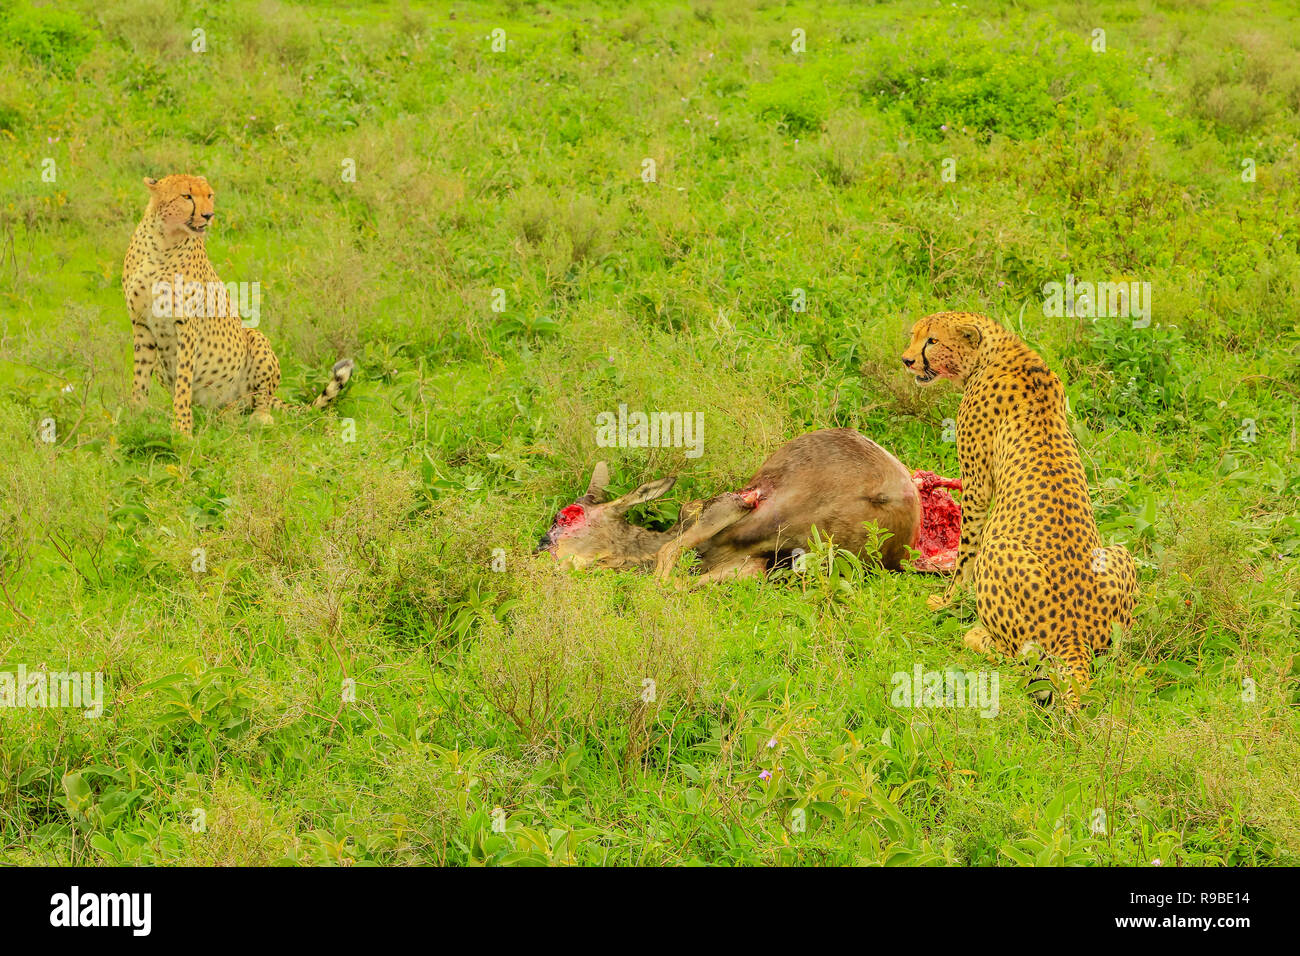 Zwei Geparden Brüder stand vor der Gnu oder Gnus nach dem Essen im grünen Gras Vegetation. Ndutu Bereich der Ngorongoro Conservation Area, Tansania, Afrika. Jagdszene. Stockfoto